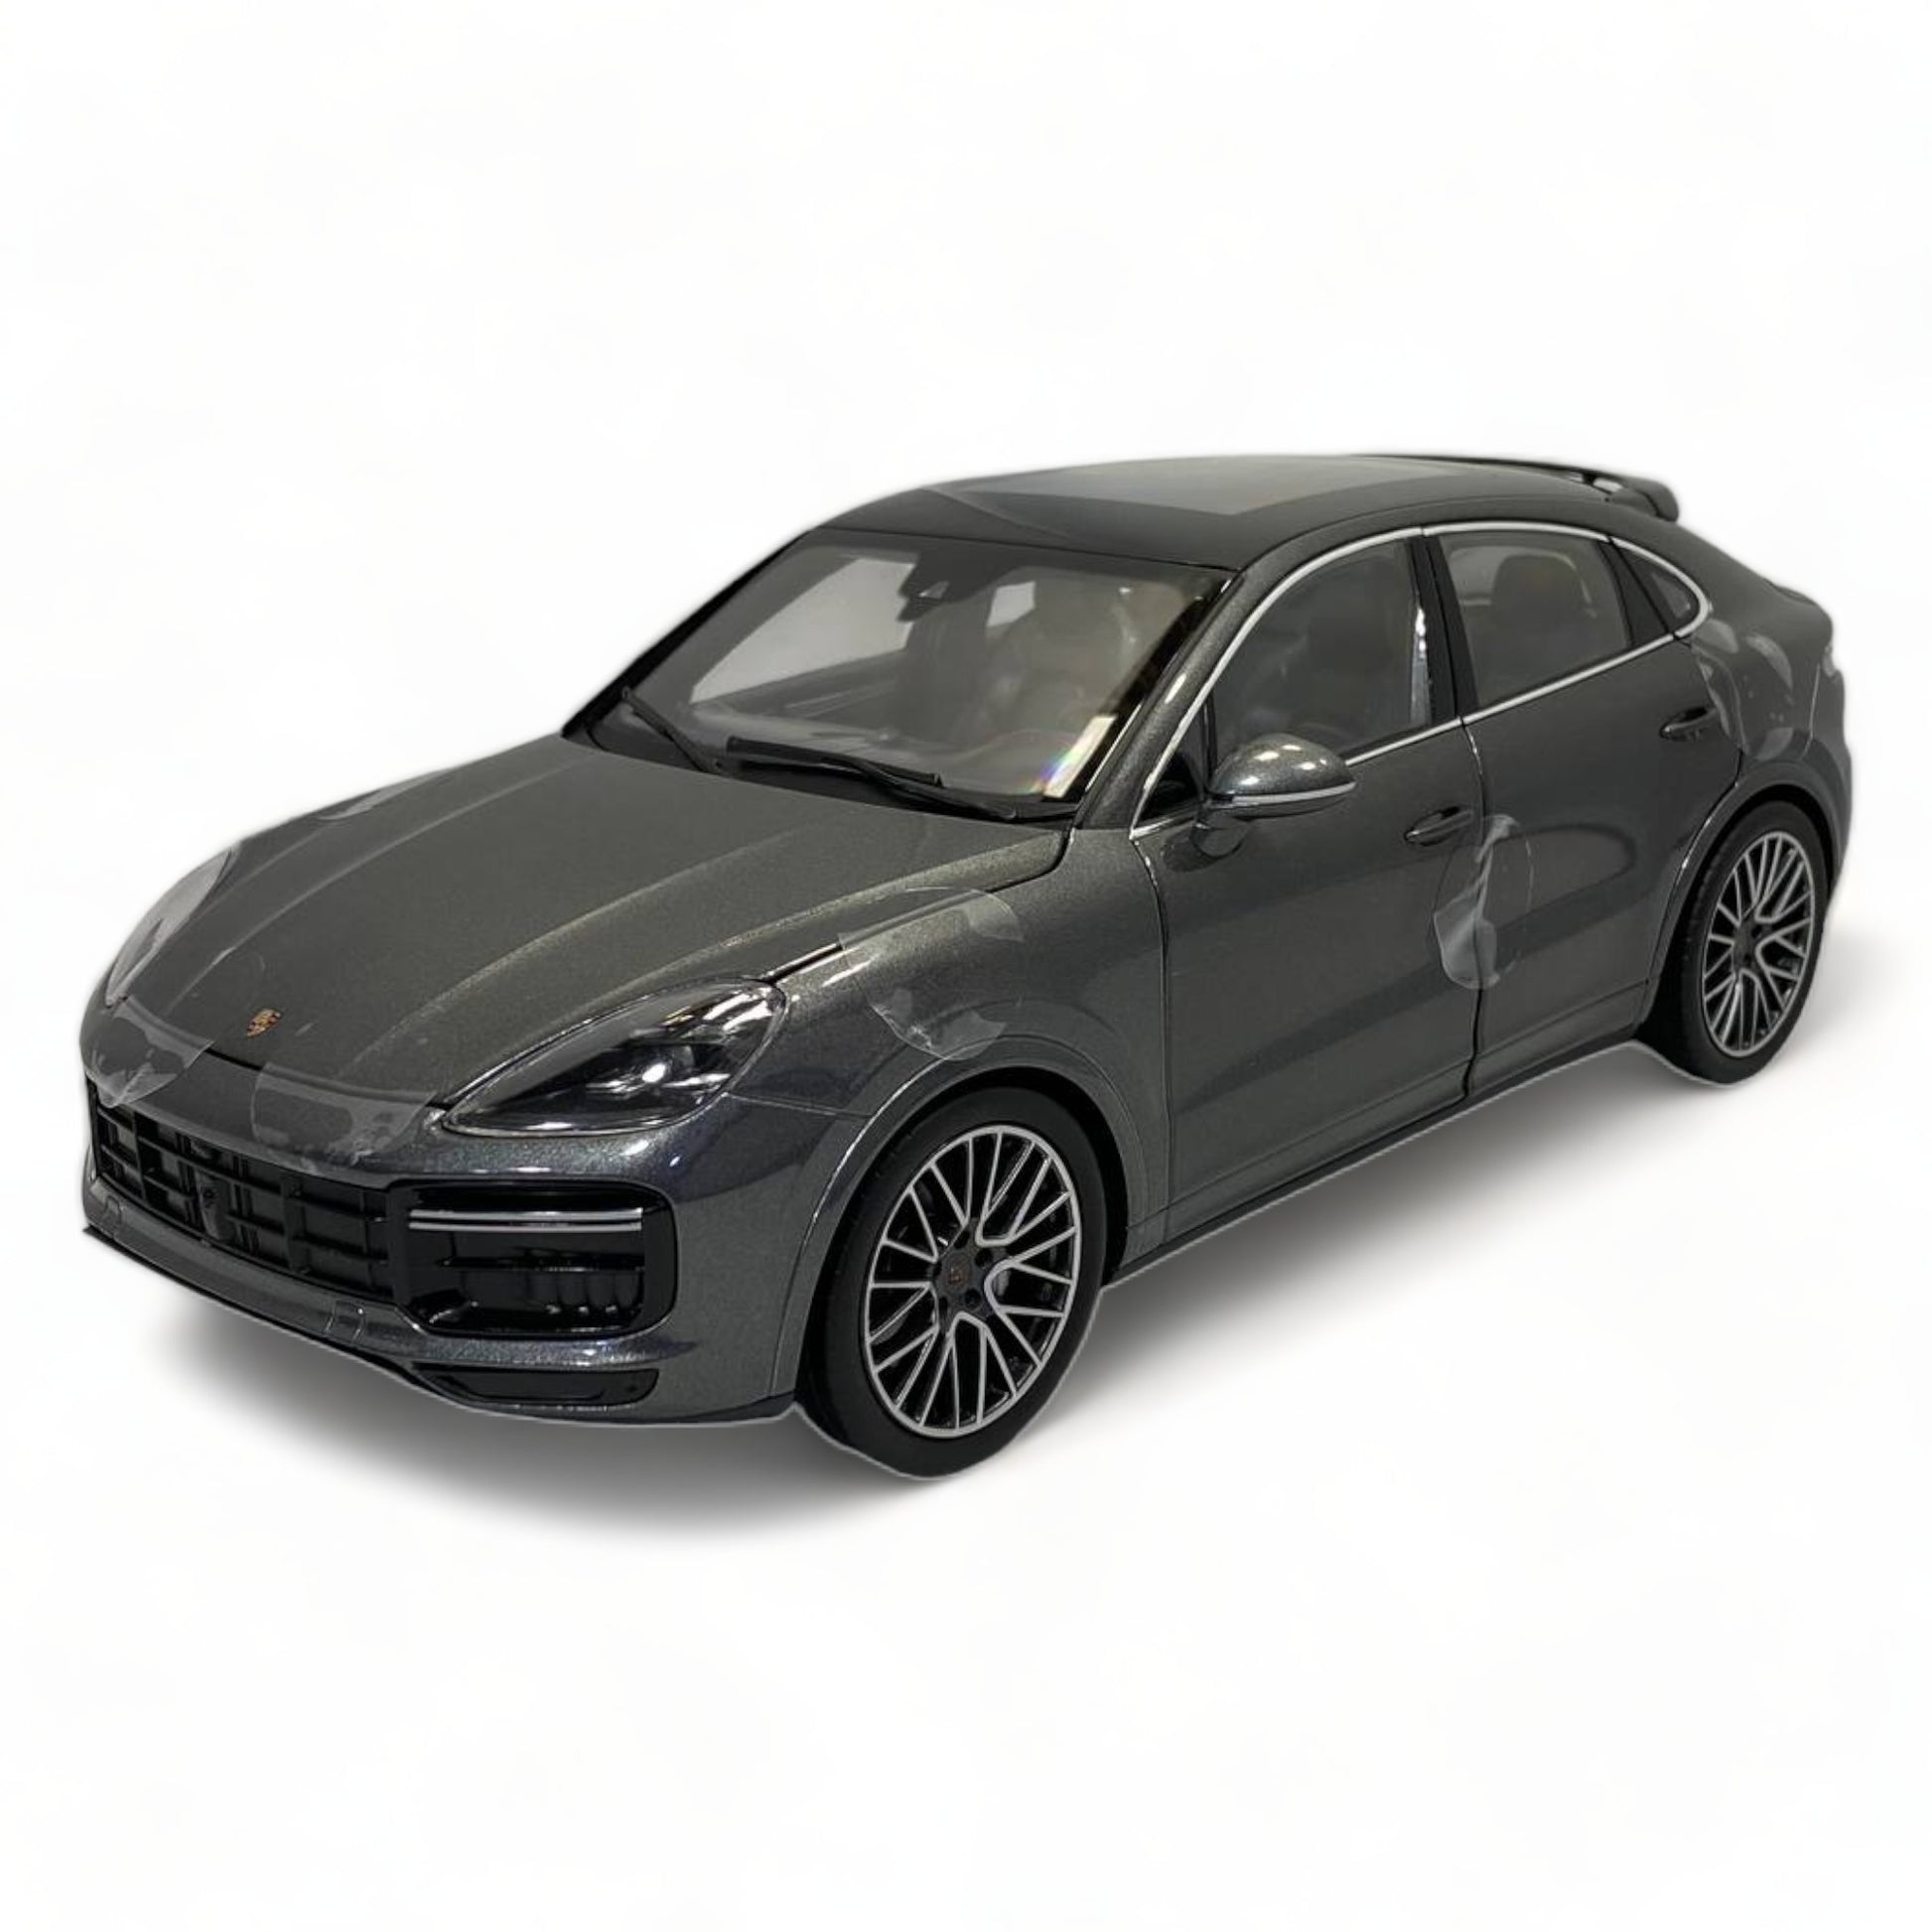 1/18 Diecast Norev Porsche CAYENNE TURBO COUPE 2019 in Grey Model Car|Sold in Dturman.com Dubai UAE.